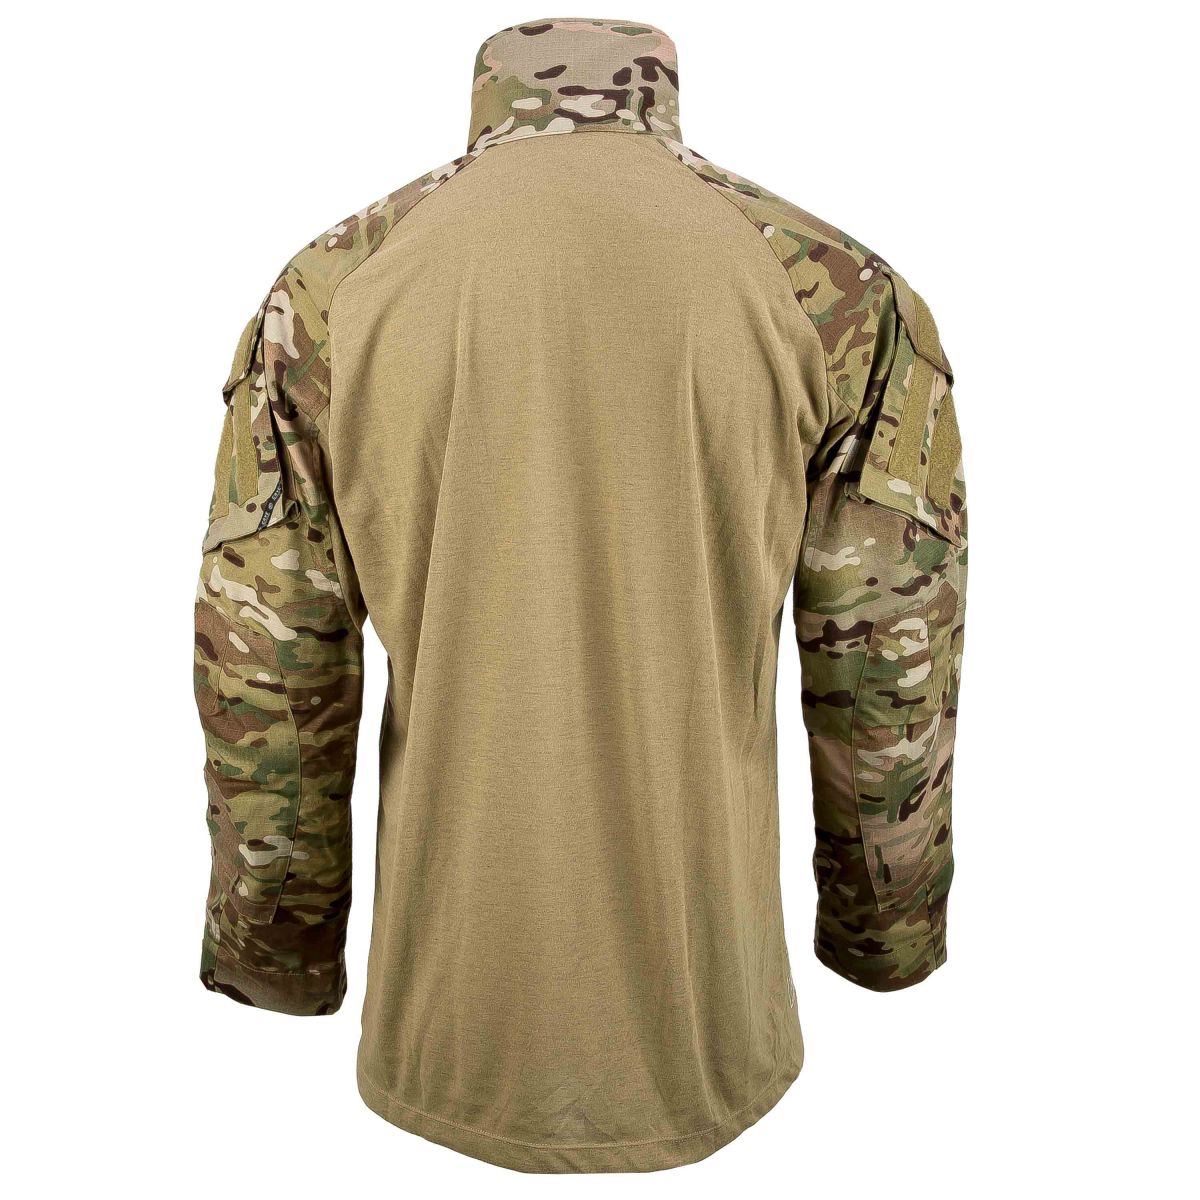 Purchase the Combat Shirt Crye Precision G3 flecktarn by ASMC